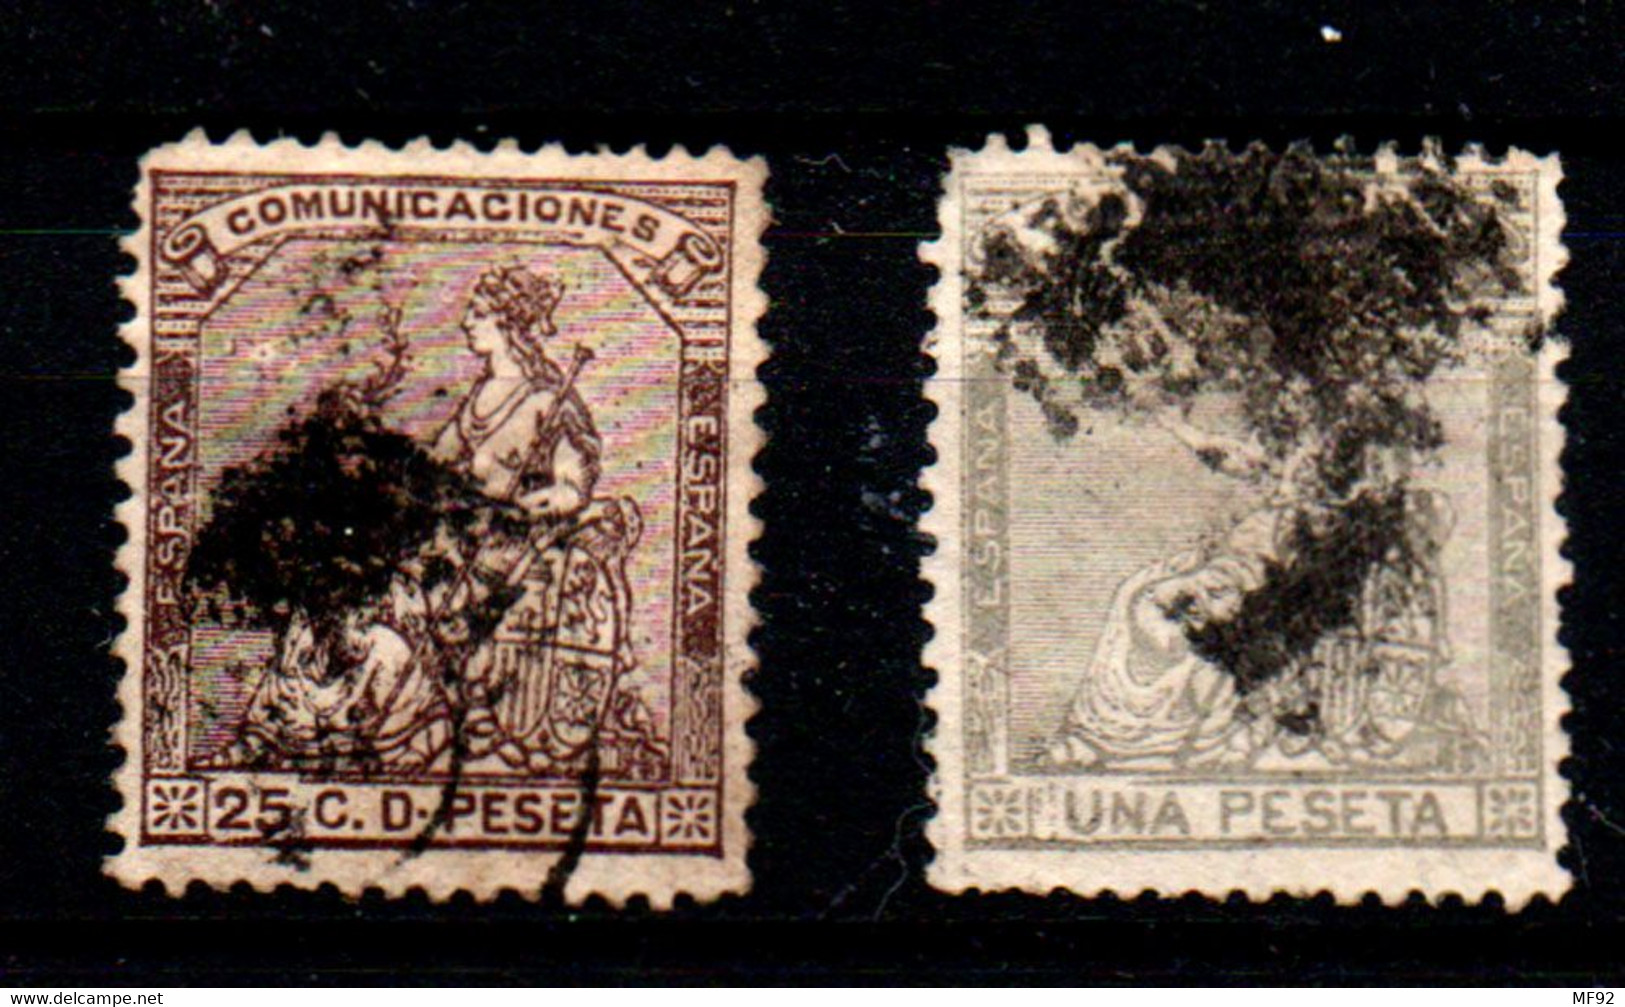 España Nº 135, 138. Año 1873 - Used Stamps